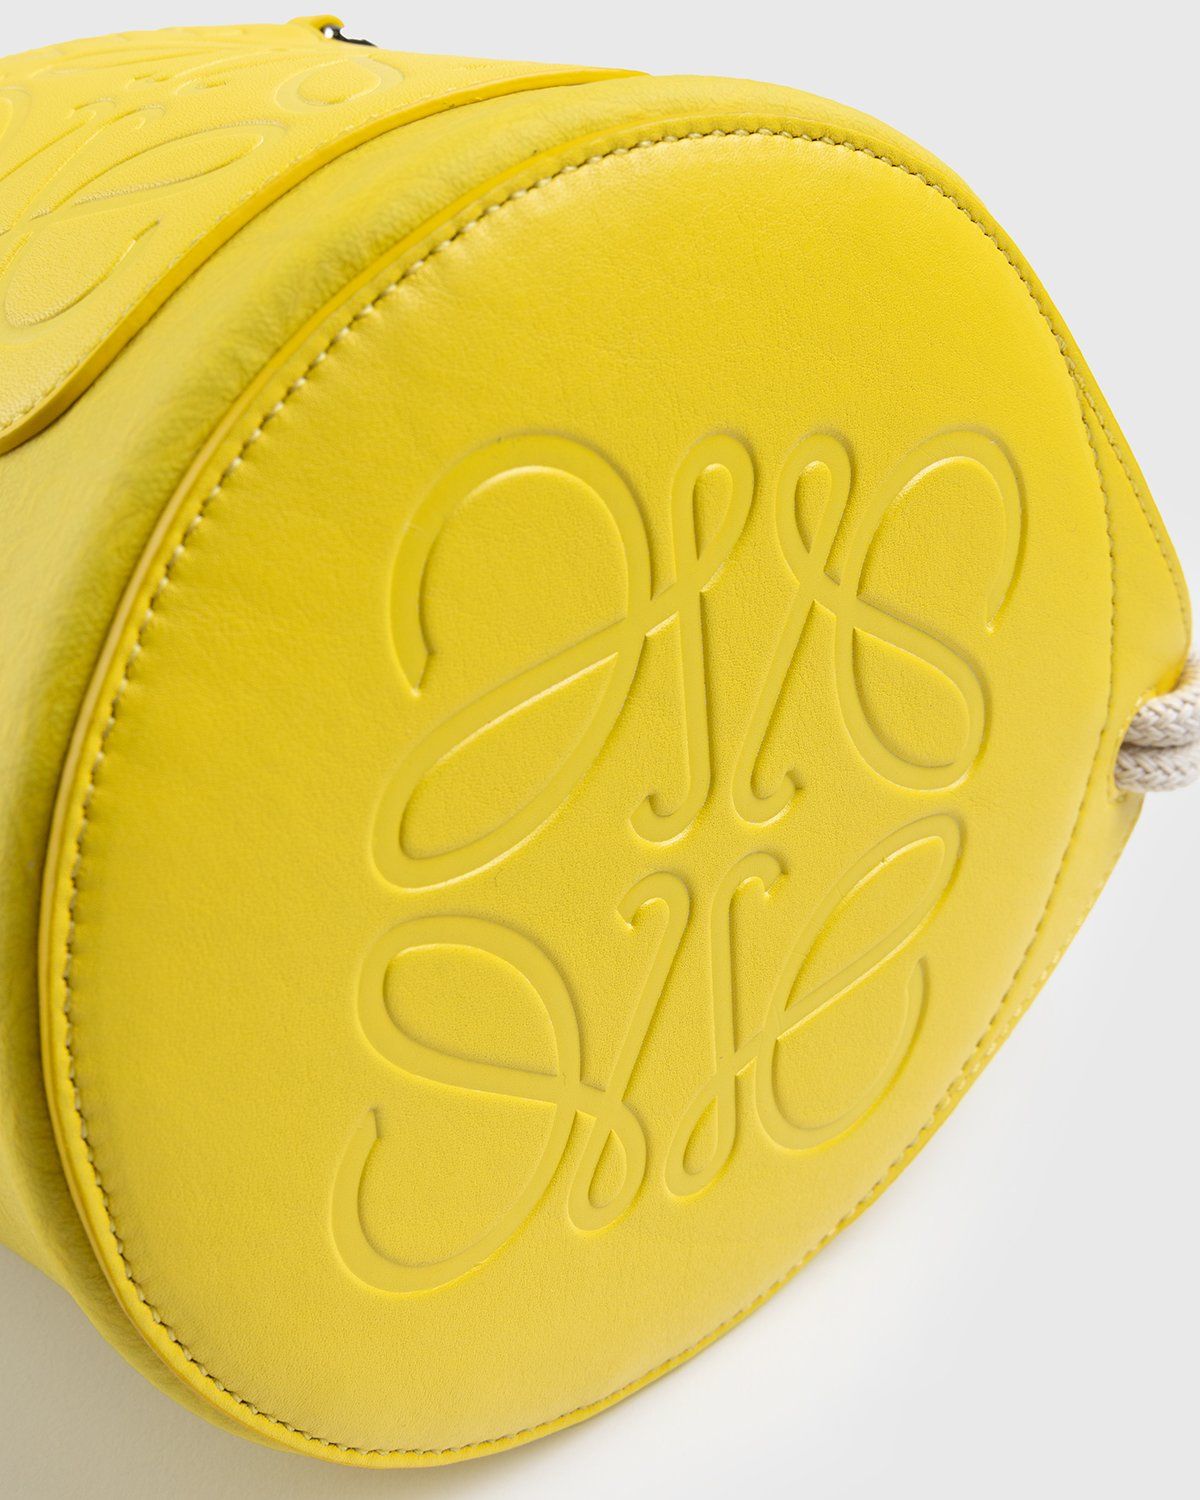 Loewe – Paula's Ibiza Small Sailor Bag Ecru/Lemon - Bags - Yellow - Image 4